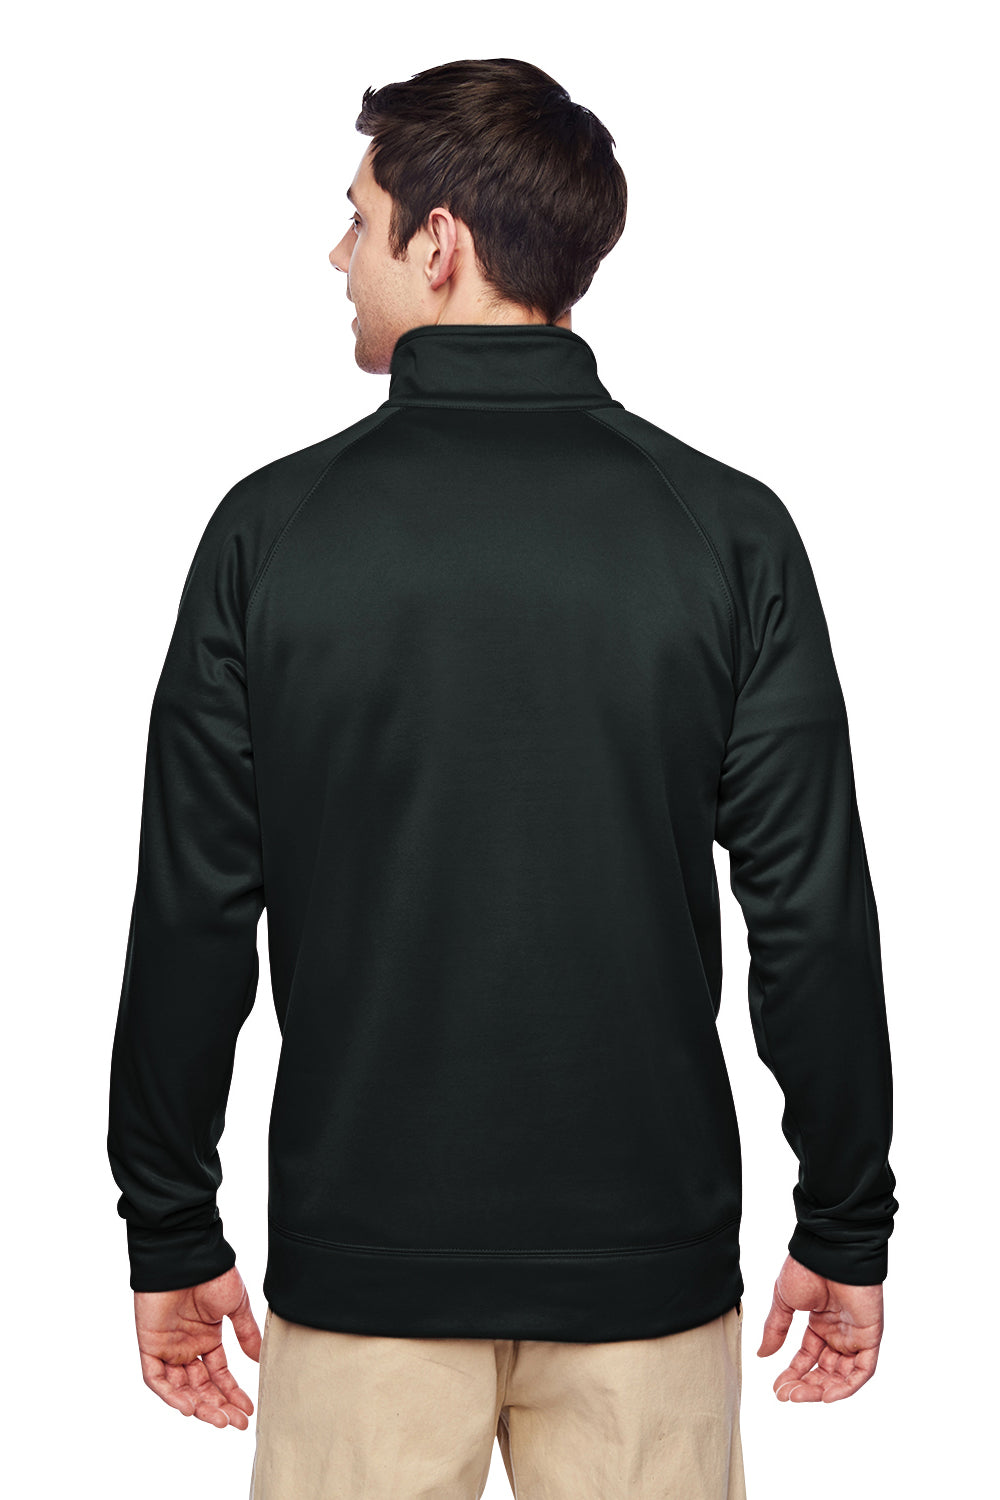 Jerzees PF95MR Mens Dri-Power Moisture Wicking 1/4 Zip Sweatshirt Black Back